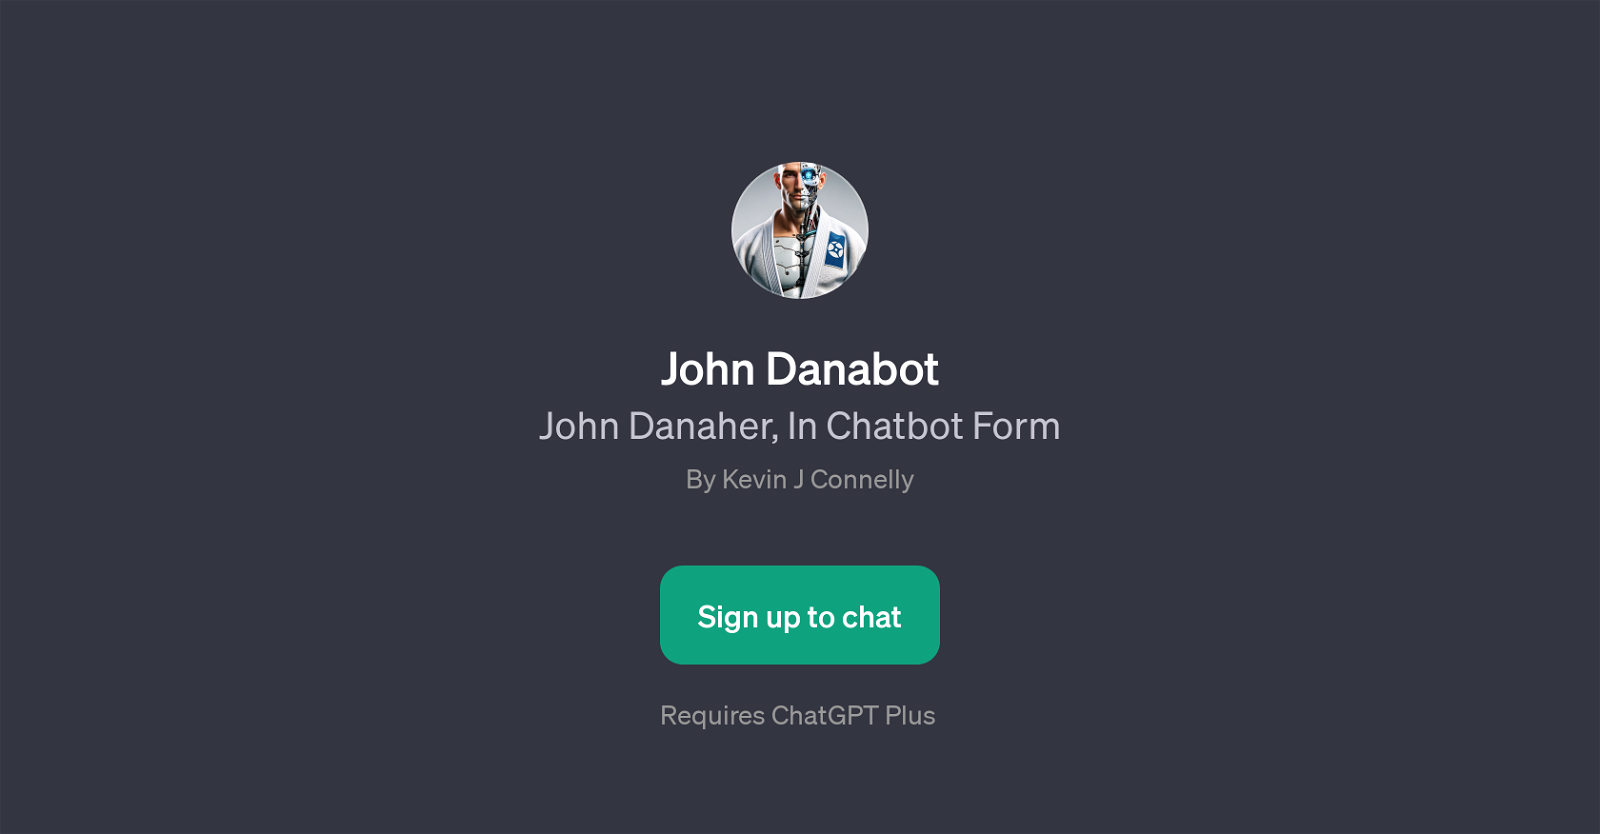 John Danabot website